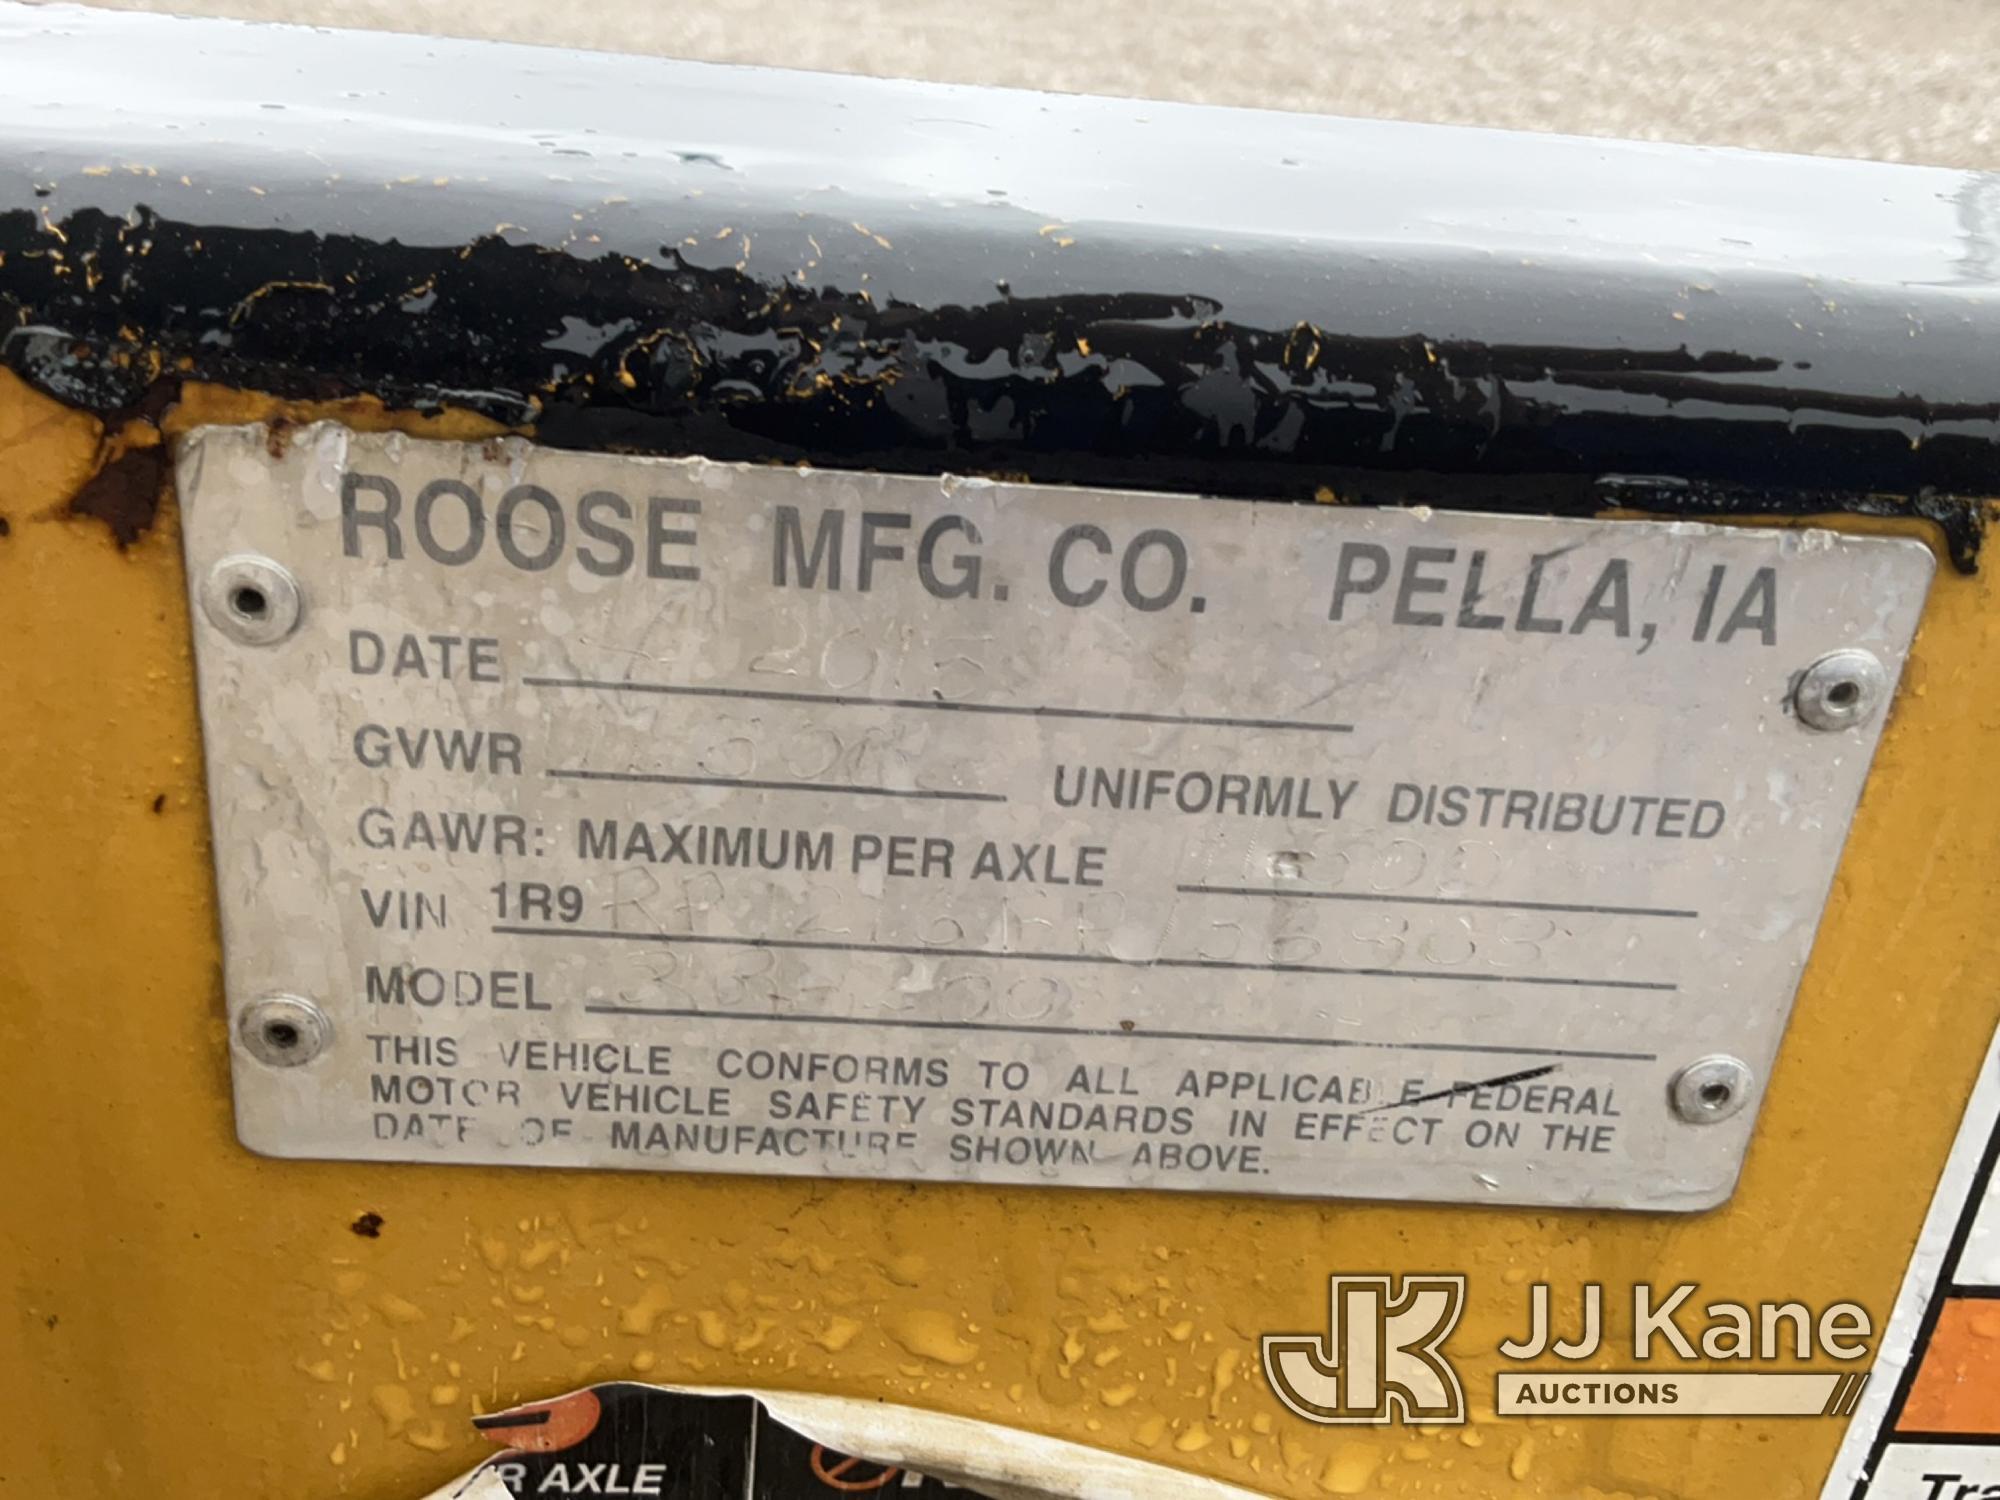 (Verona, KY) 2015 Roose RR200 S/A Reel Trailer NO TITLE) (Rust Damage, No Reel Bar